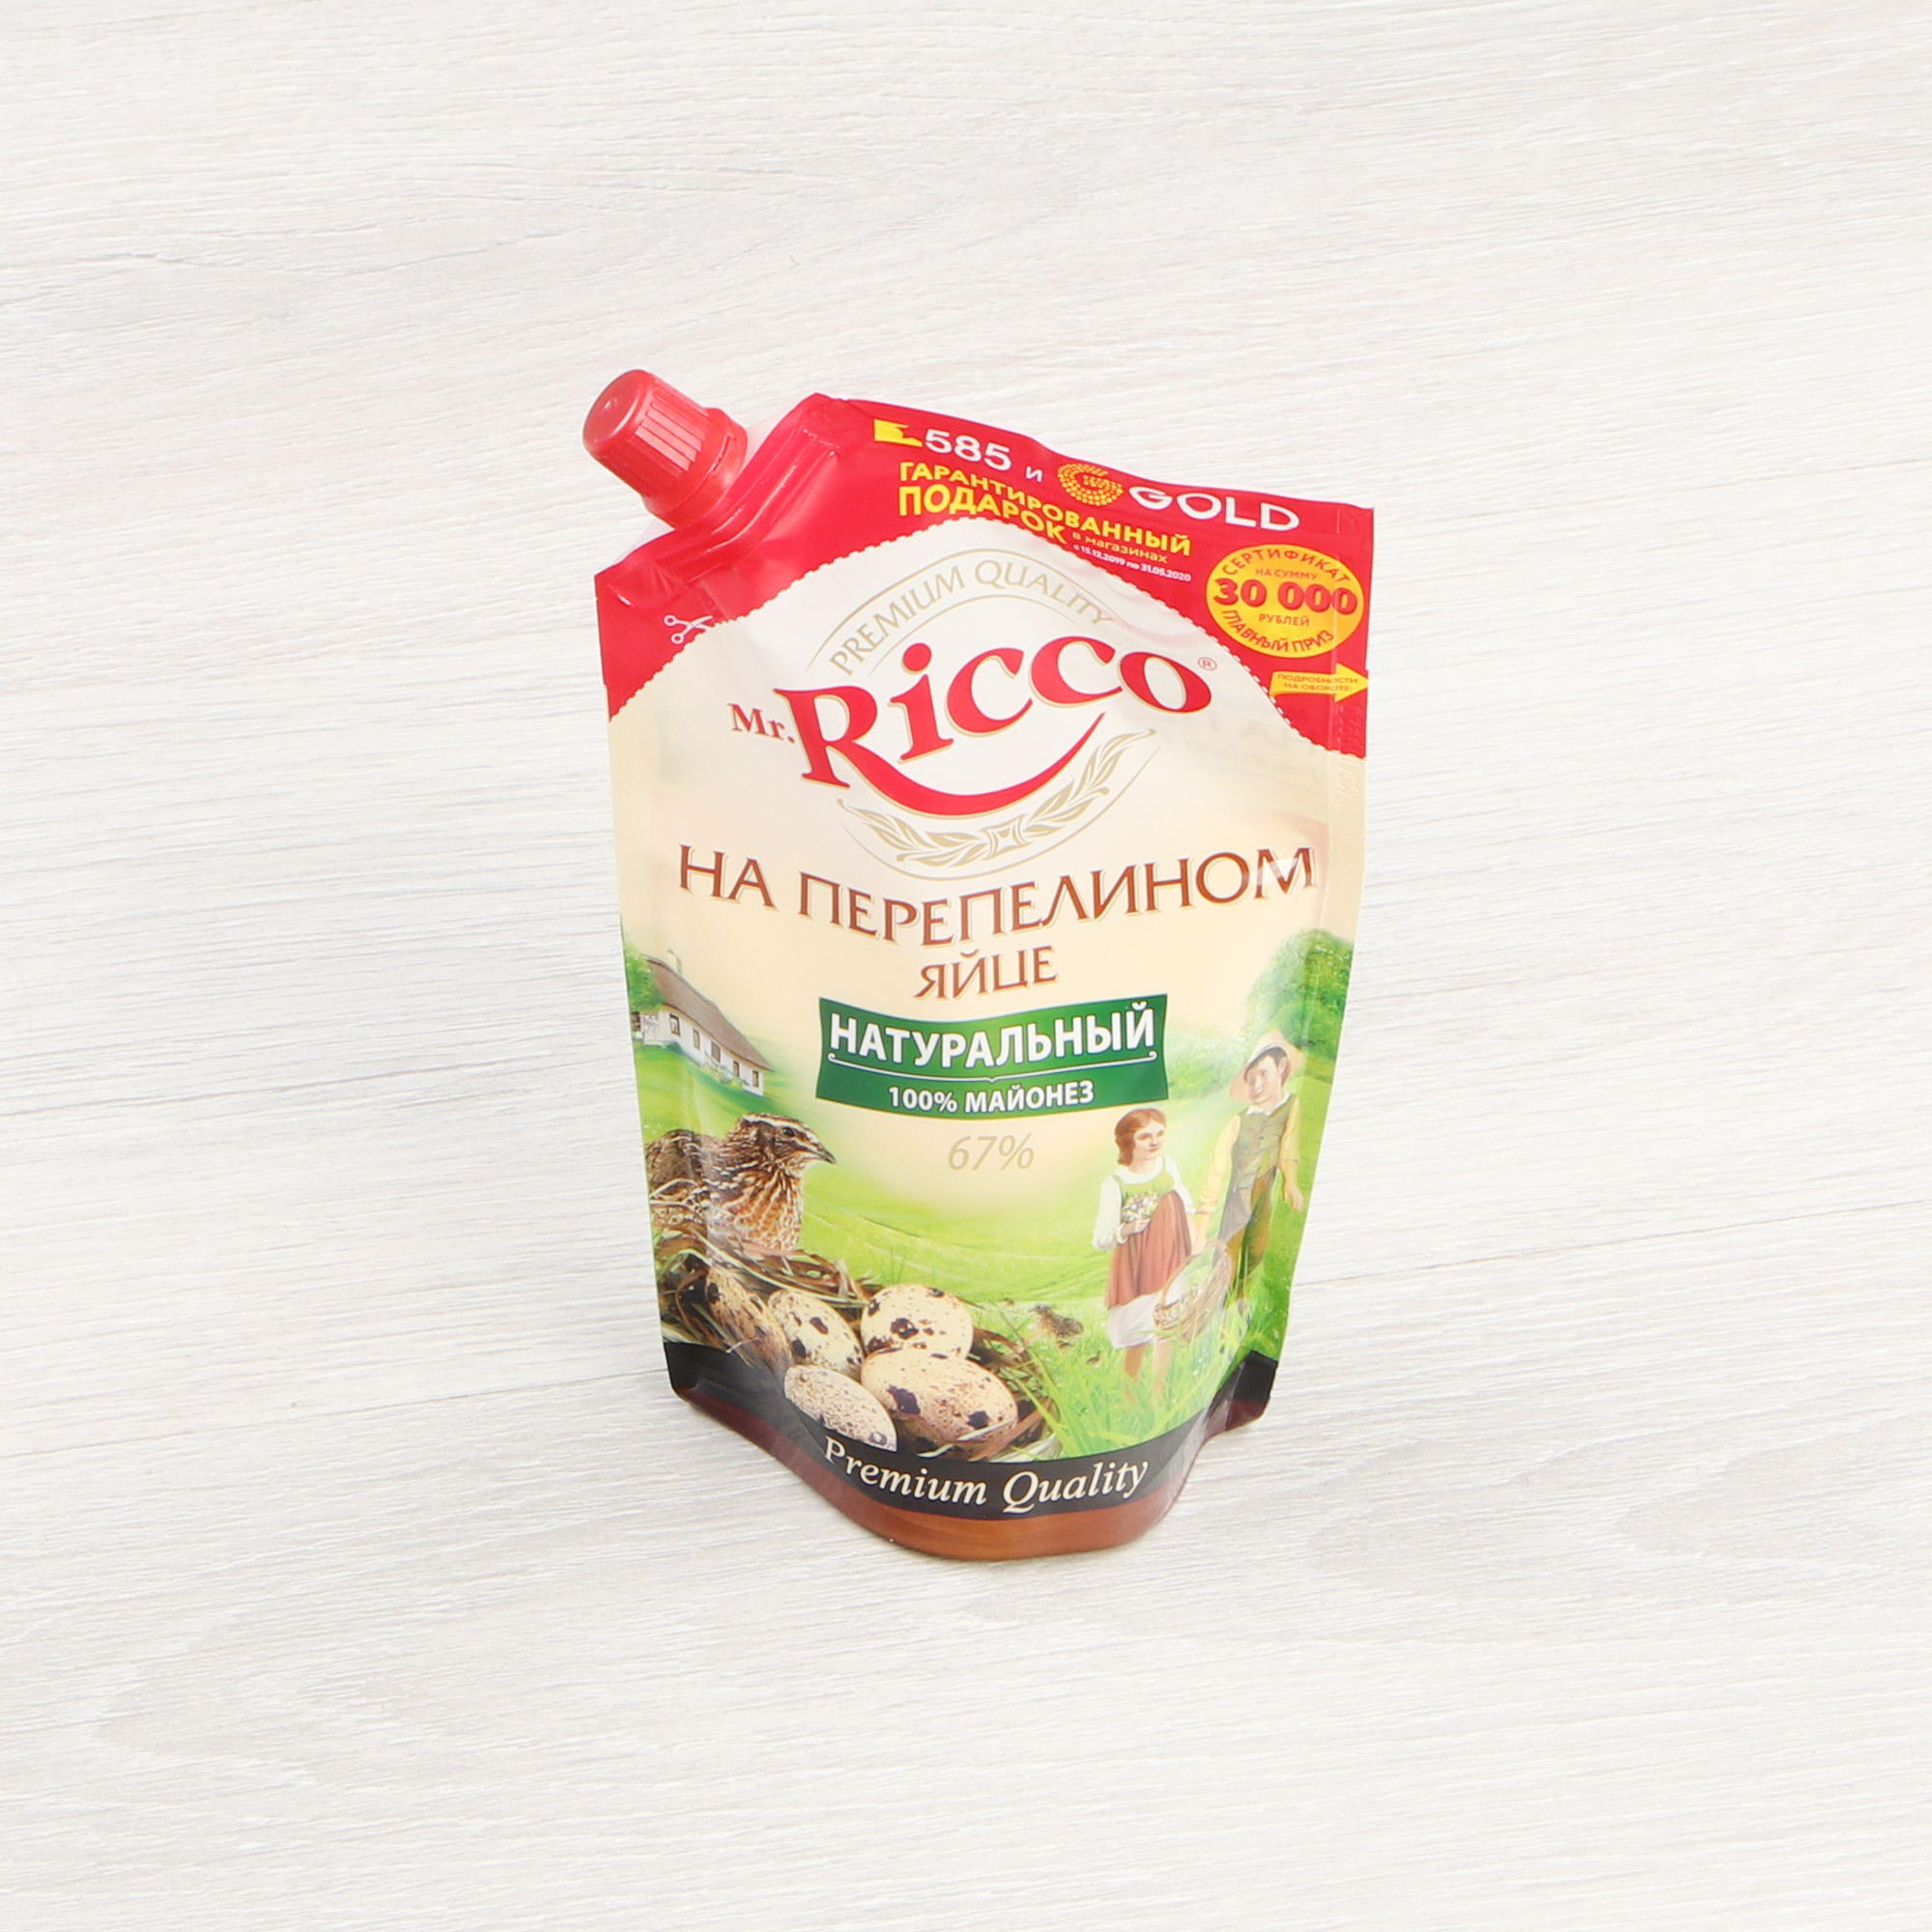 Майонез Mr.Ricco Organic перепелиное яйцо 67% 400 мл майонез mr ricco organic с маслом авокадо 67% 400 мл